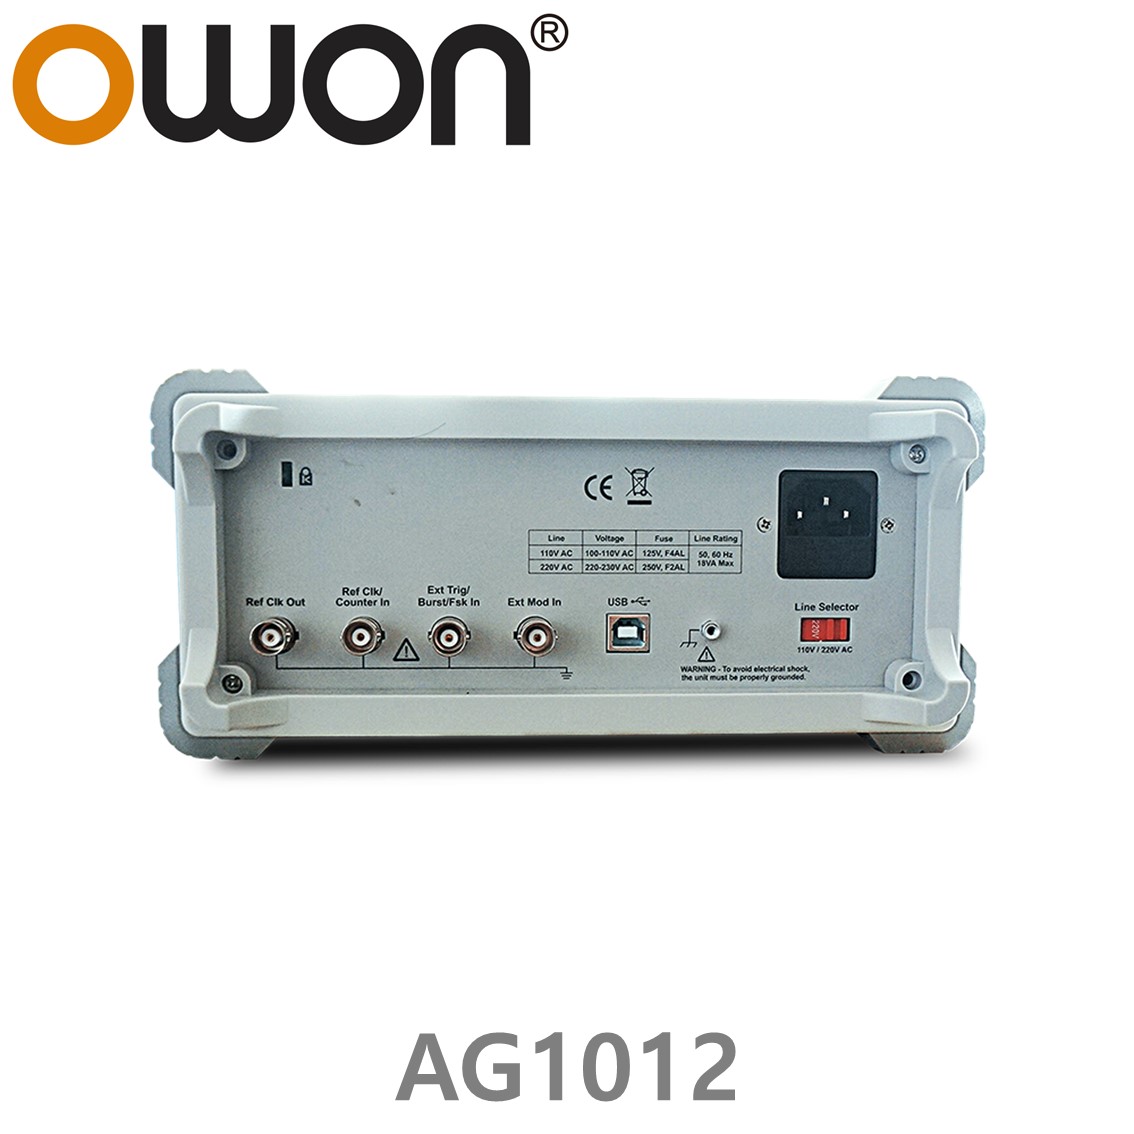 [ OWON ] AG1012 임의 파형발생기 2CH, 10MHz, 125MS/s